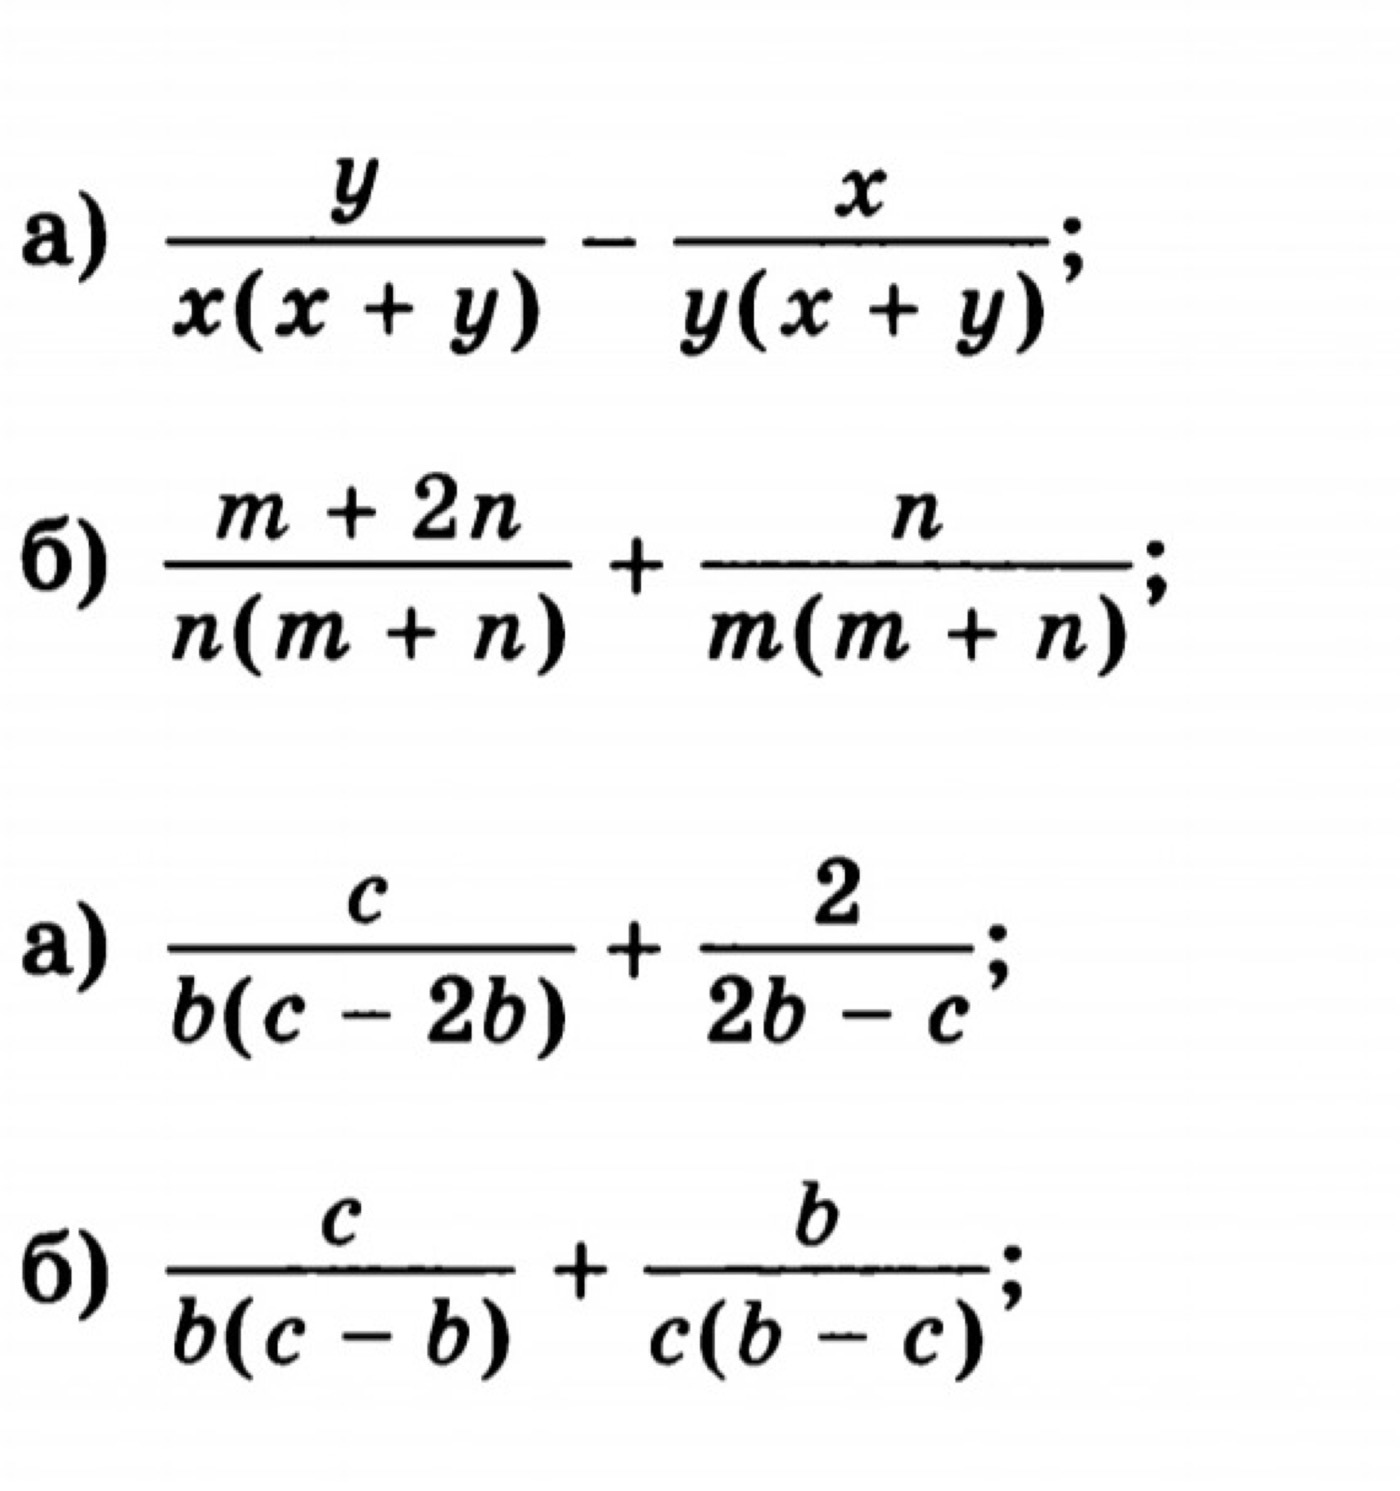 решить пример по фото алгебра 7